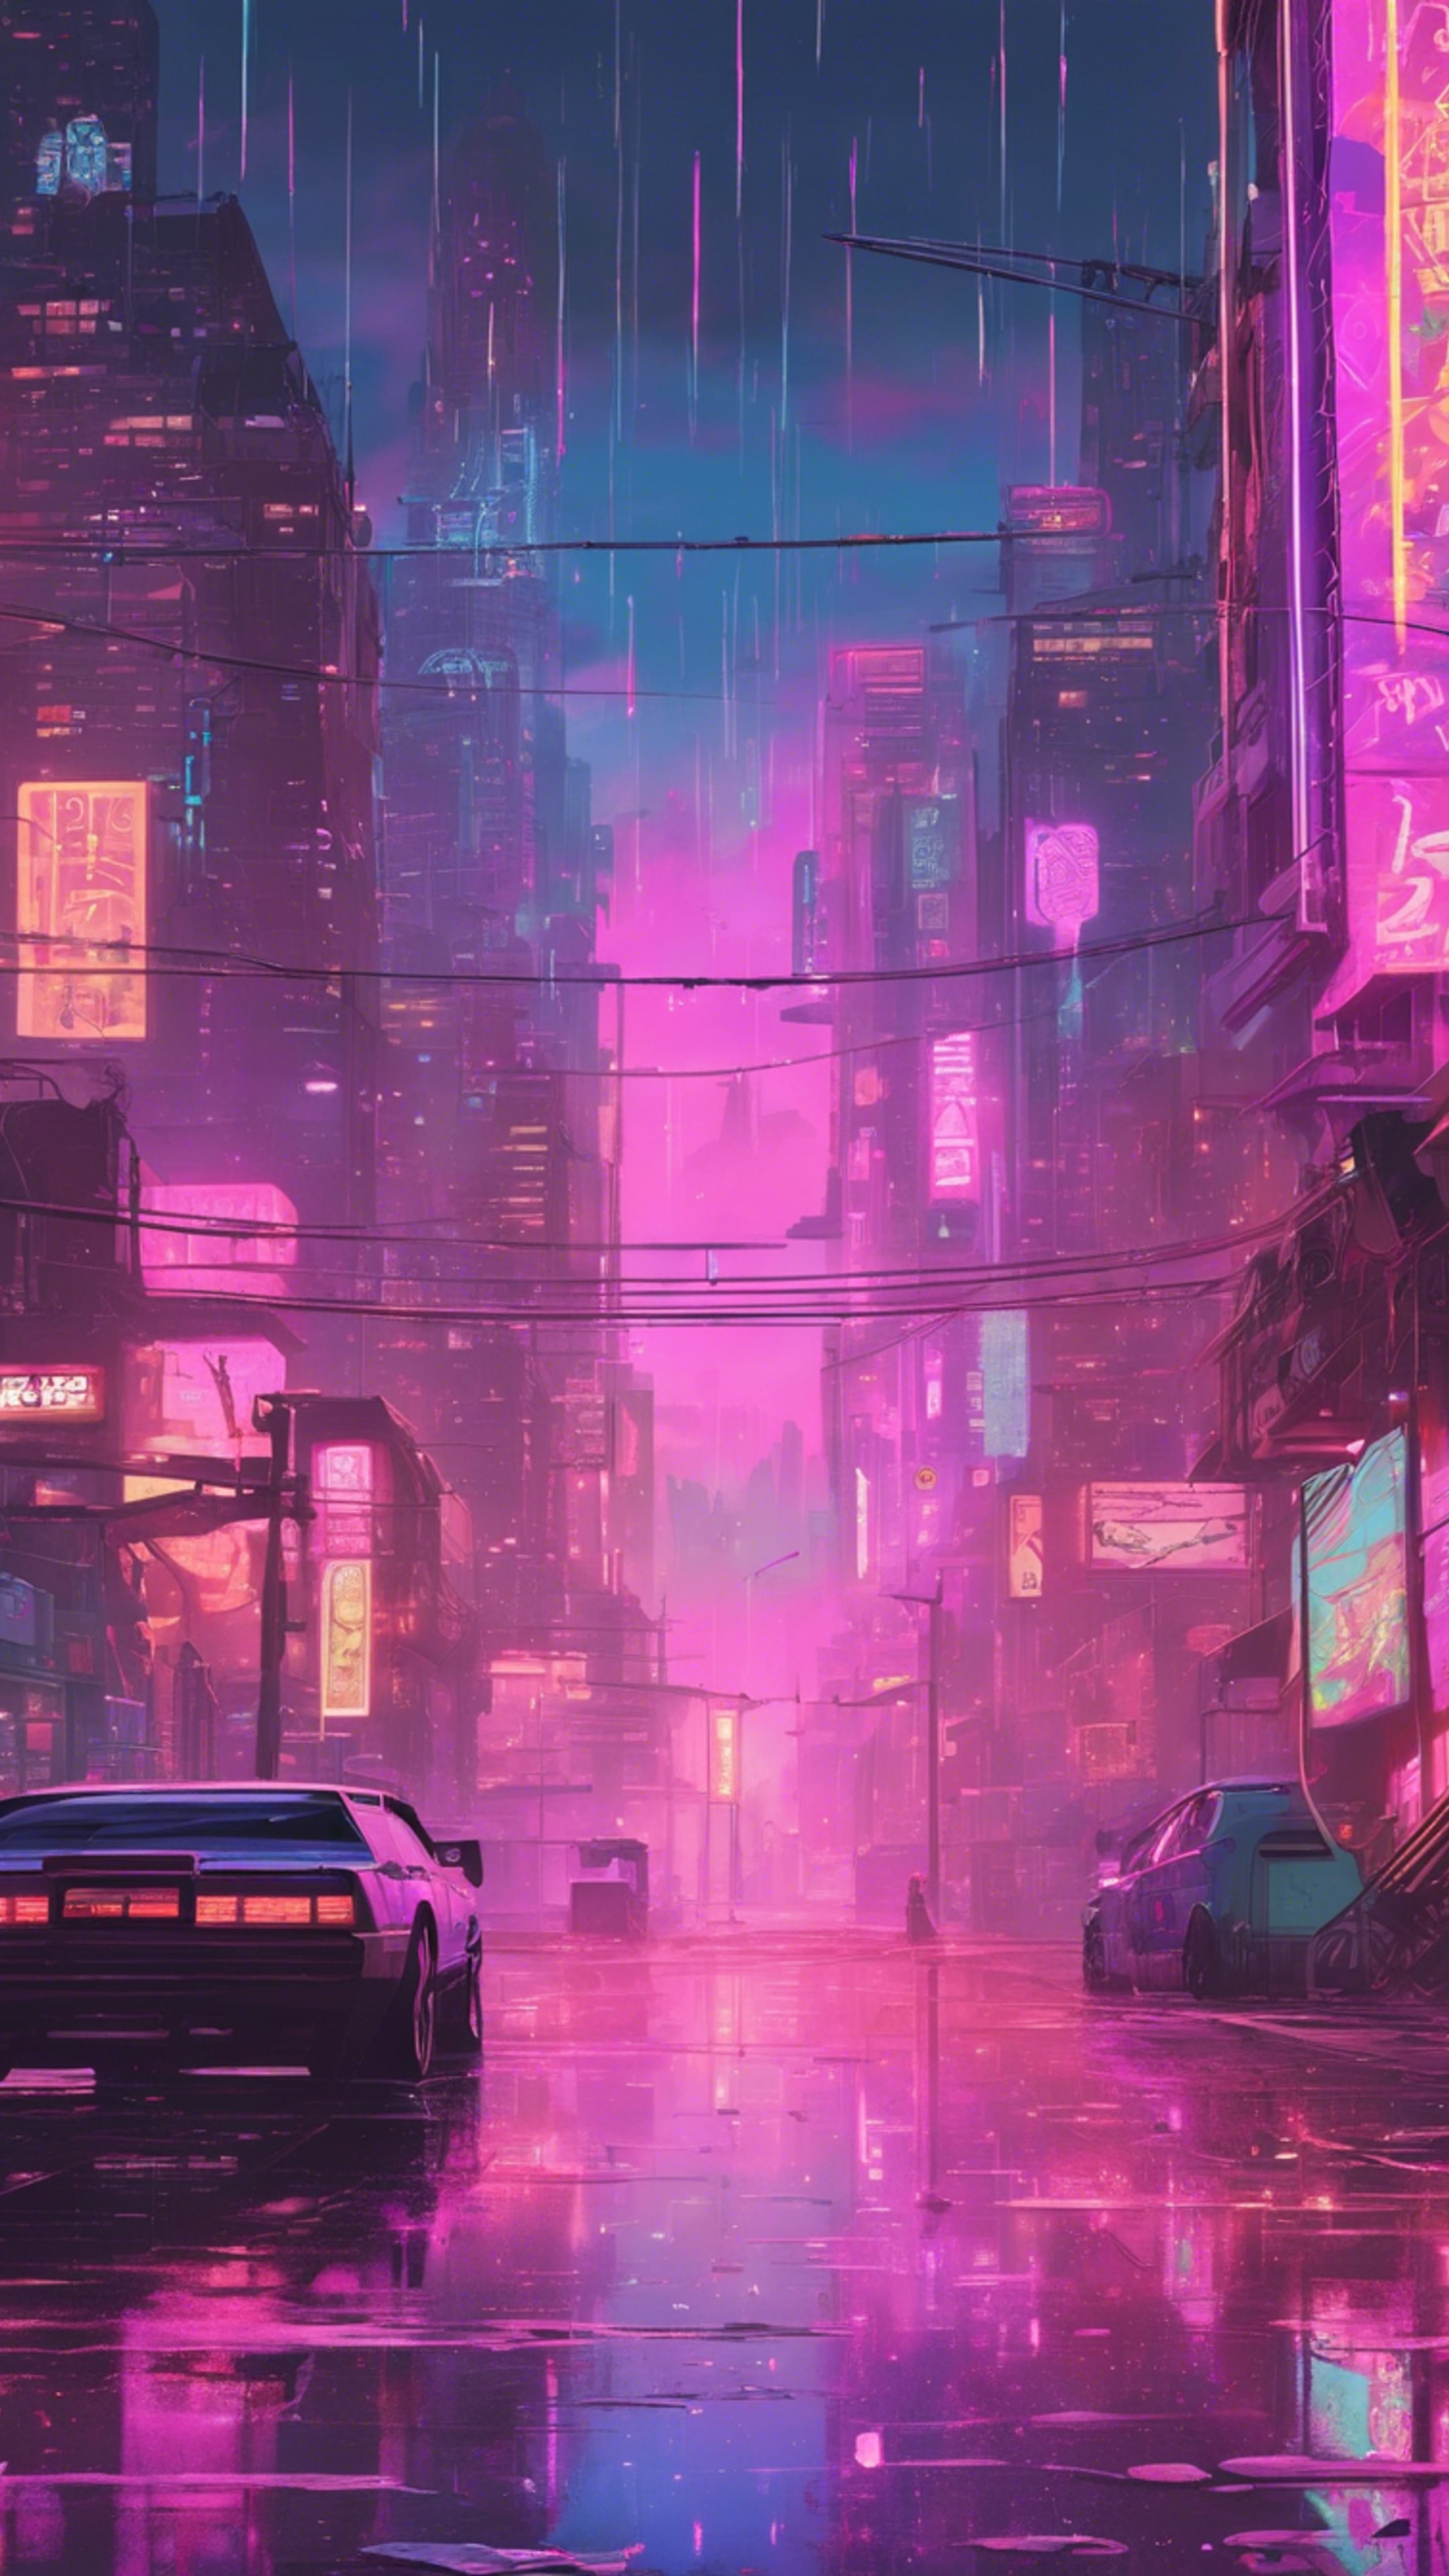 Rain droplets falling on a pastel hued cyberpunk landscape during twilight. Papel de parede[35d5b220b29e421186ff]